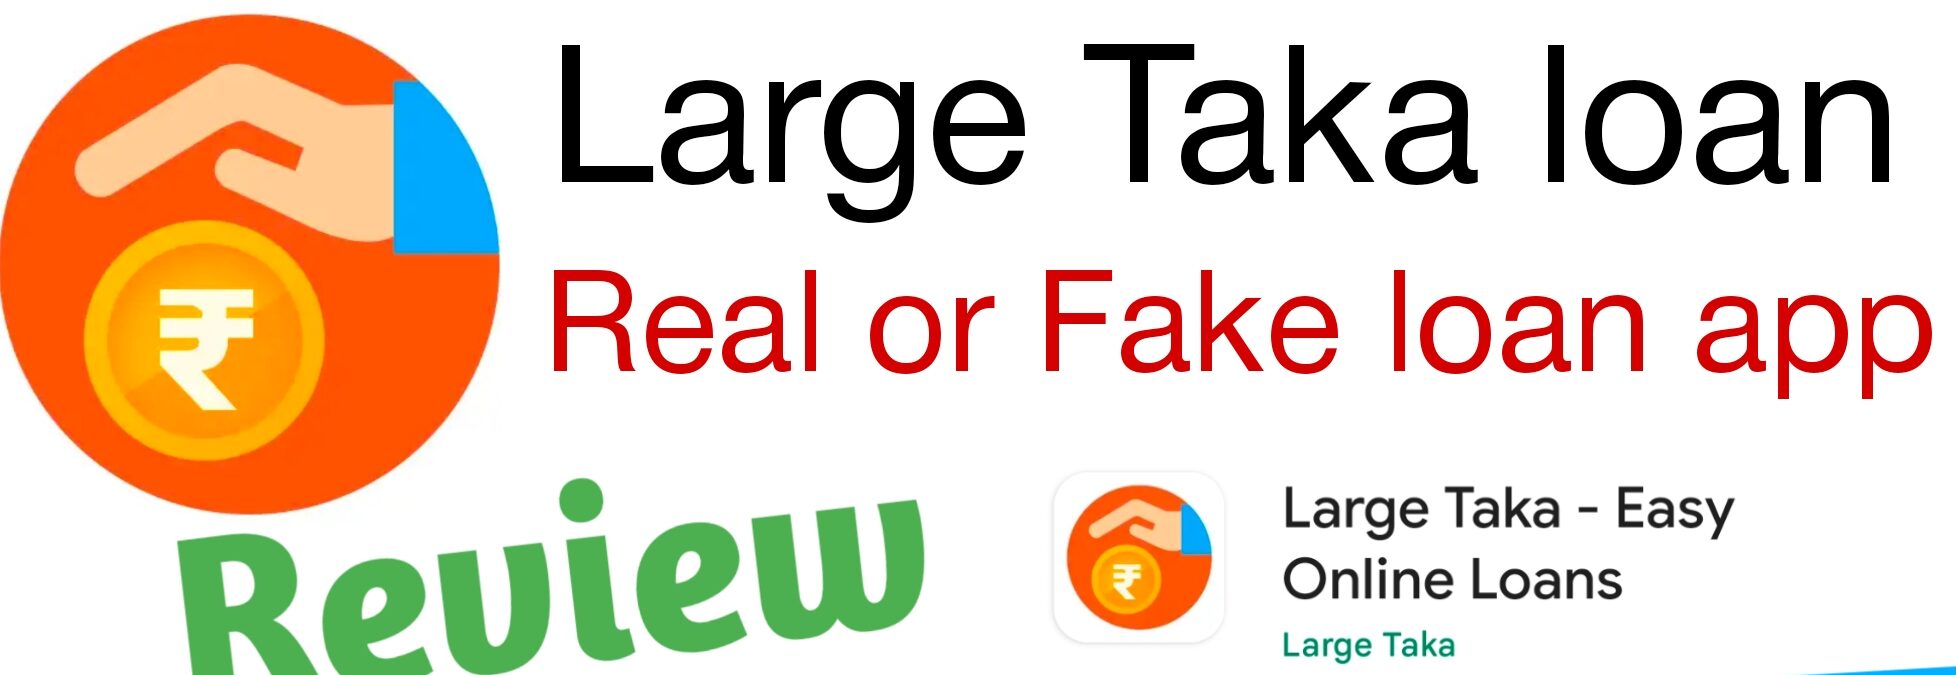 Large Taka loan app Review